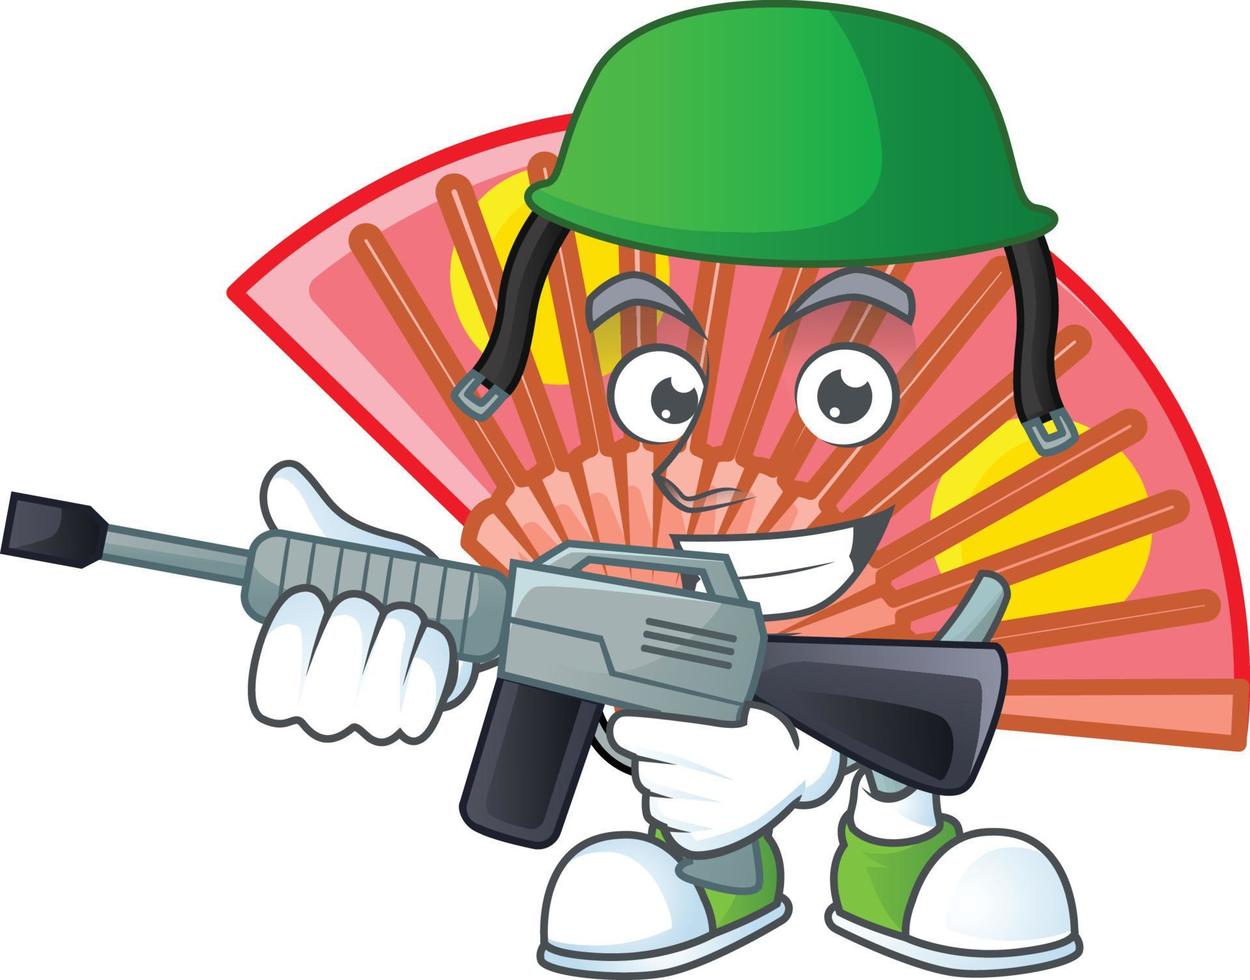 rood Chinese vouwen ventilator tekenfilm karakter stijl vector